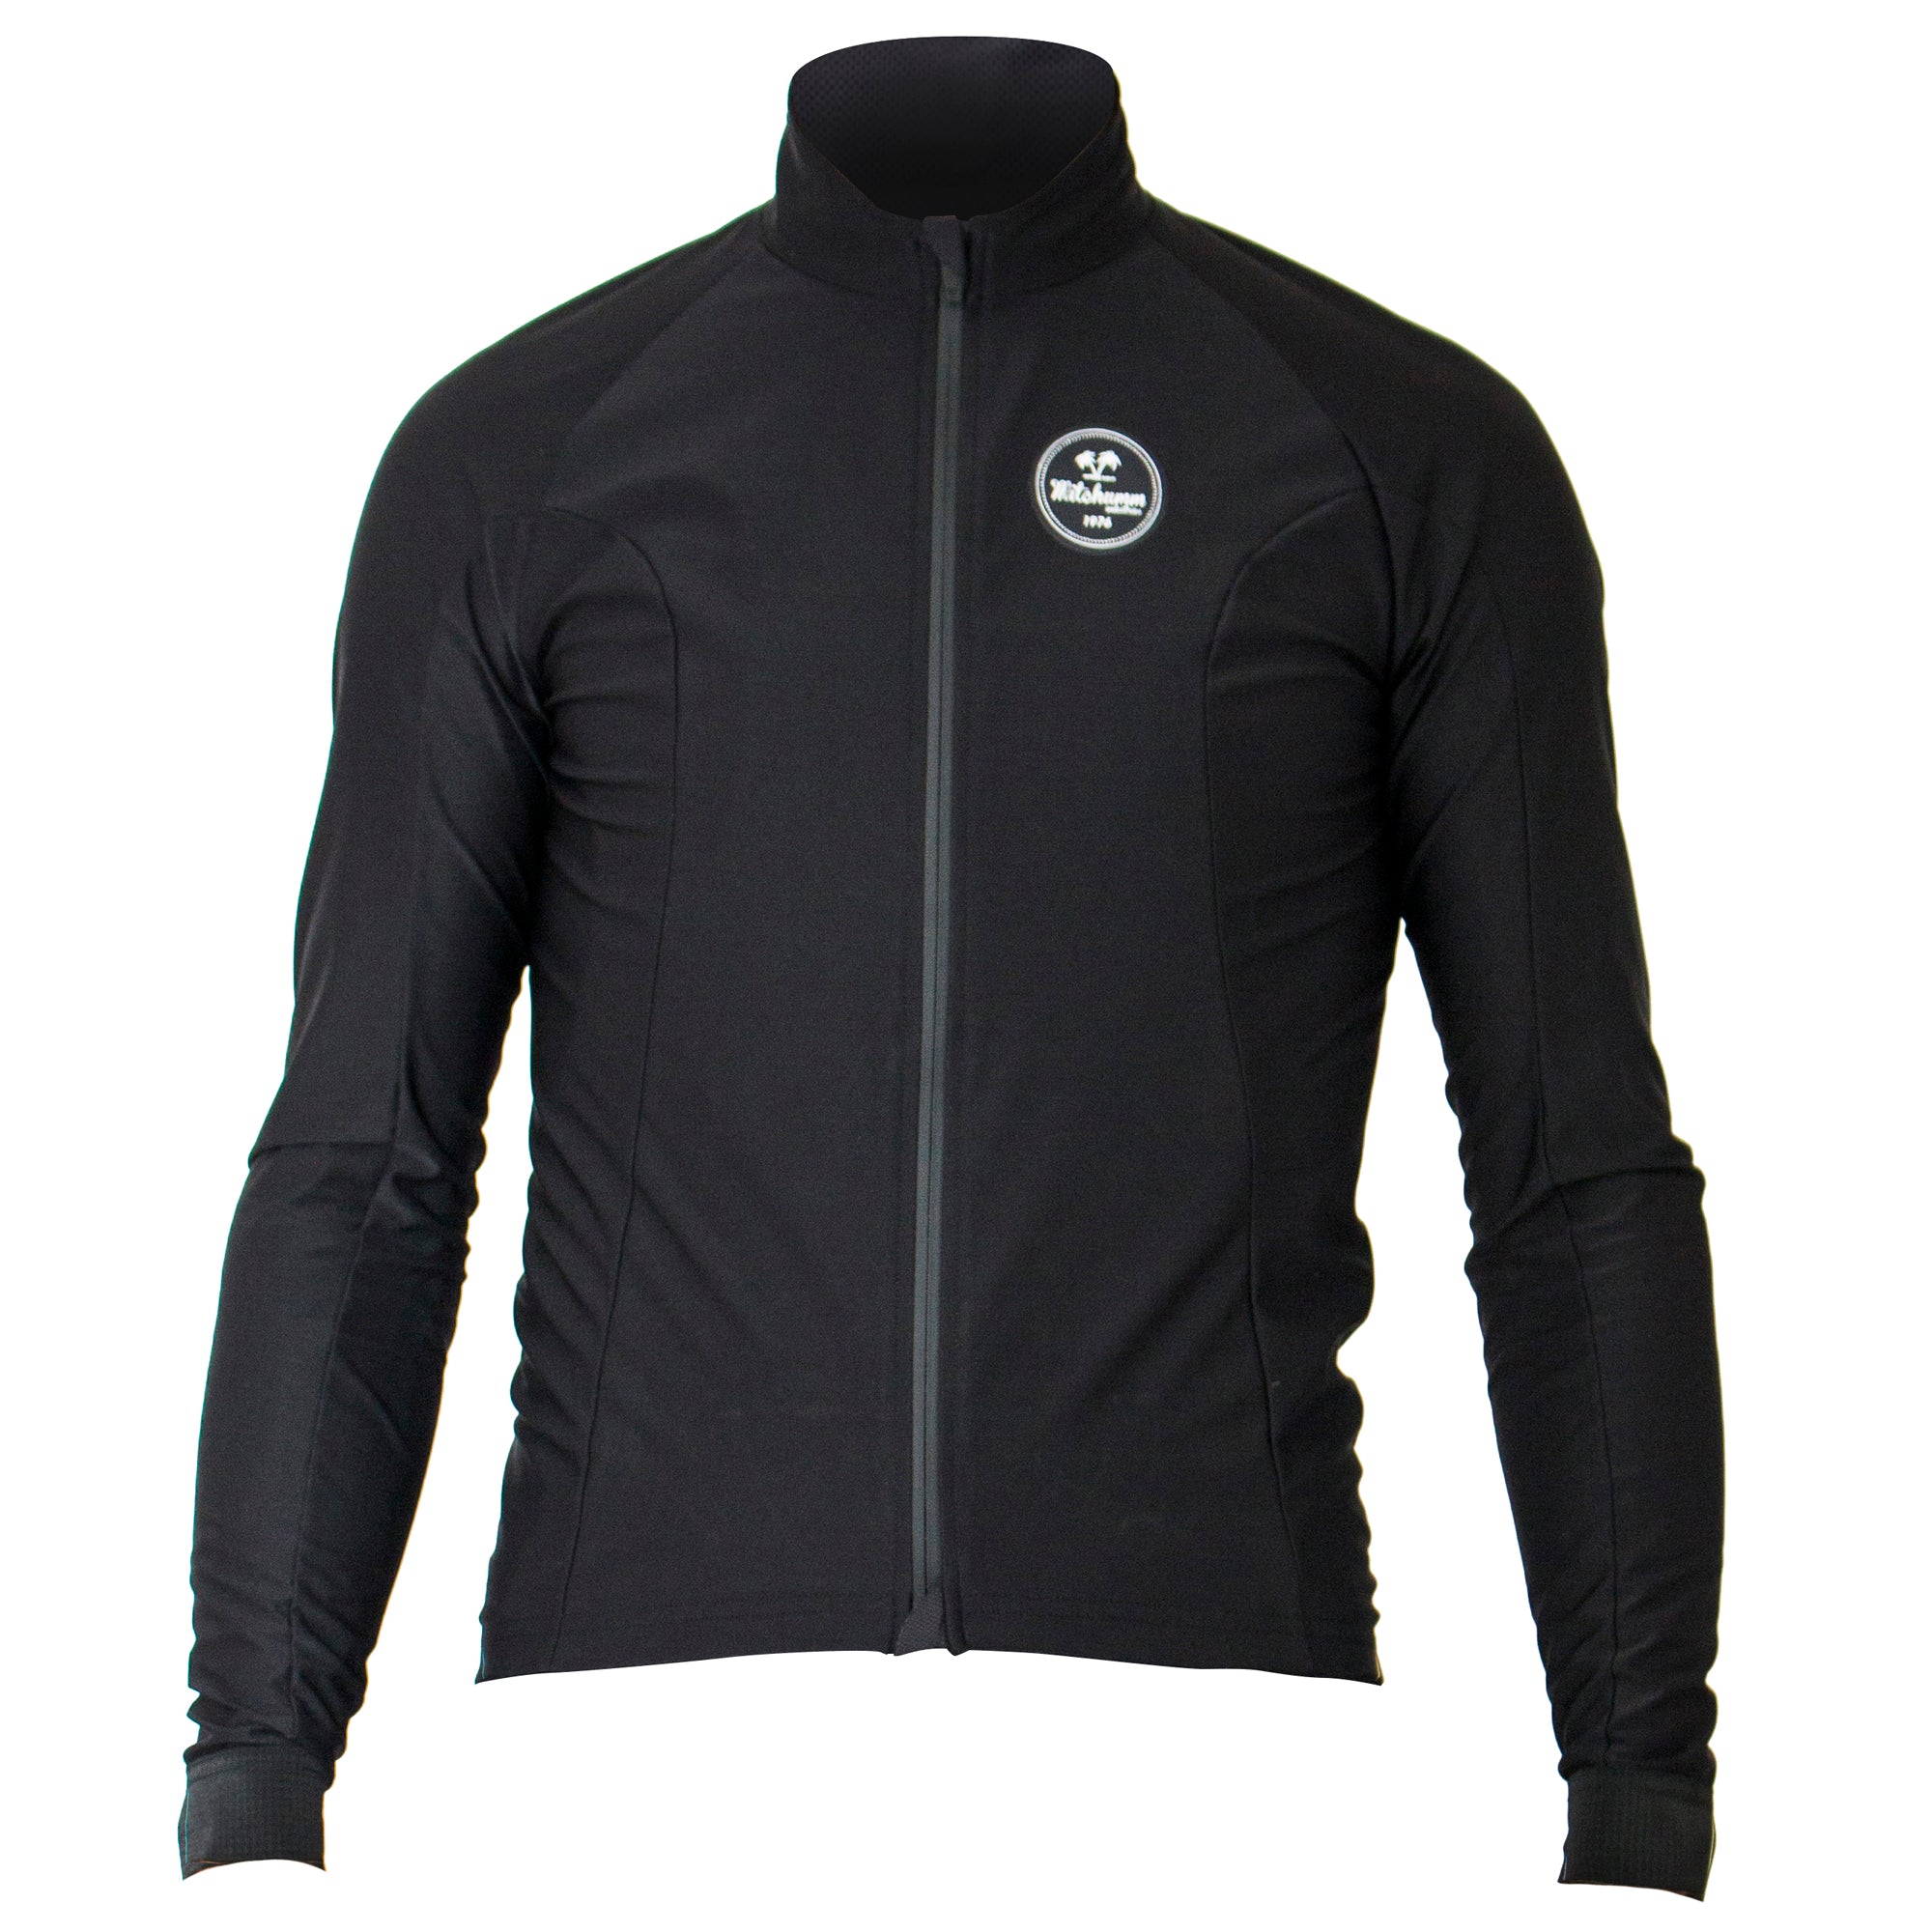 Mitchumm Cycling - Wind proof jacket